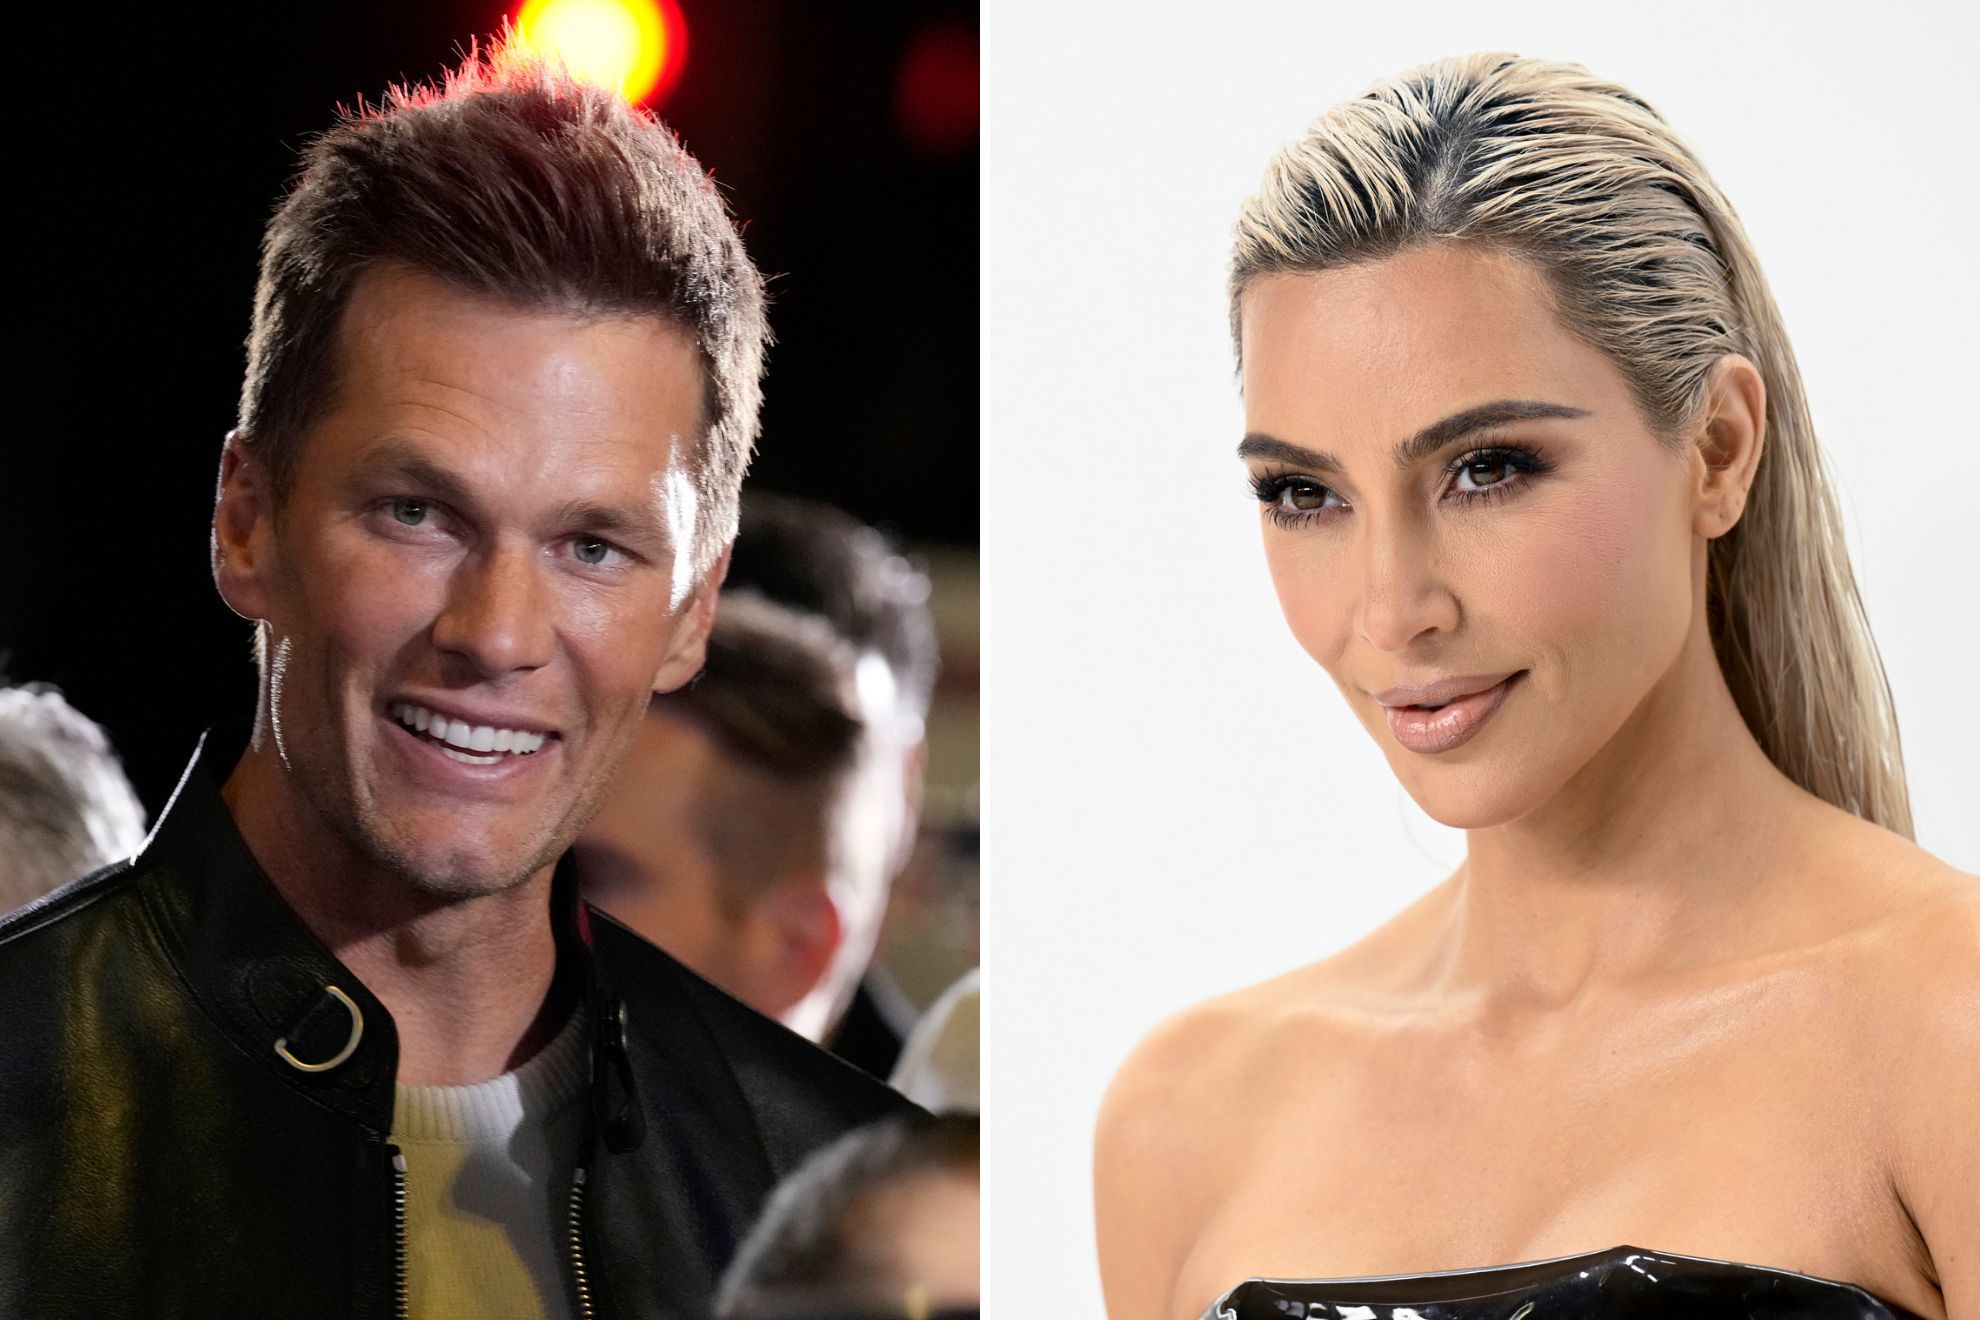 Tom Brady should date Kim Kardashian, TV host suggests